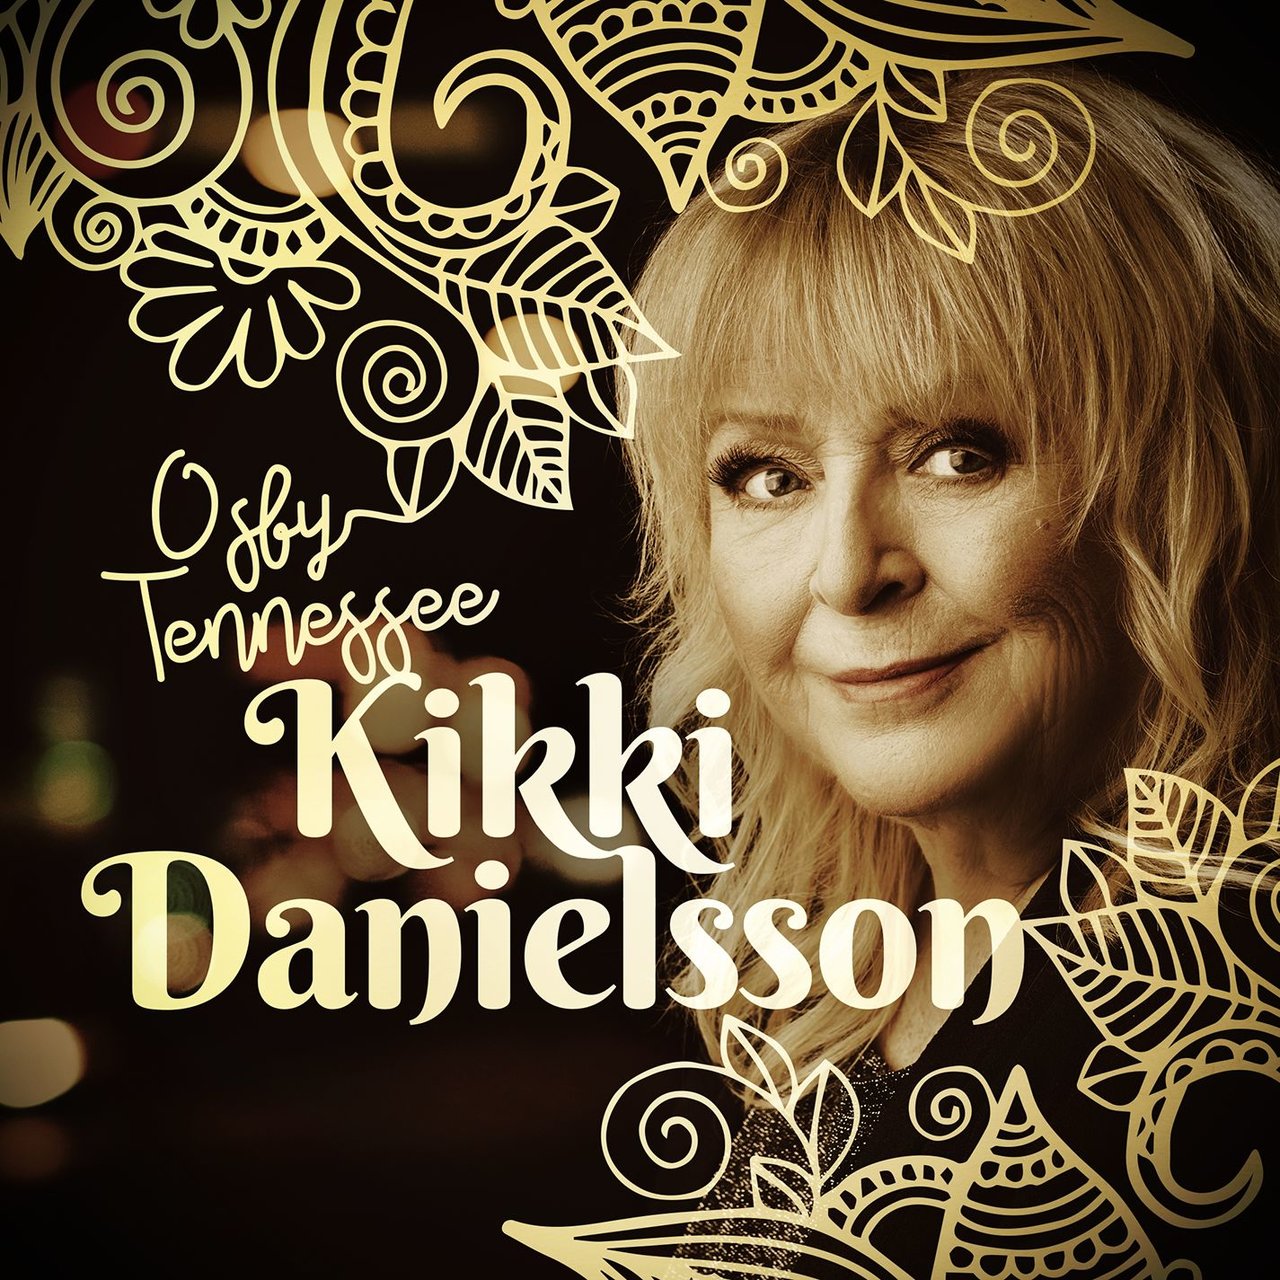 Kikki Danielsson — Osby Tennessee cover artwork